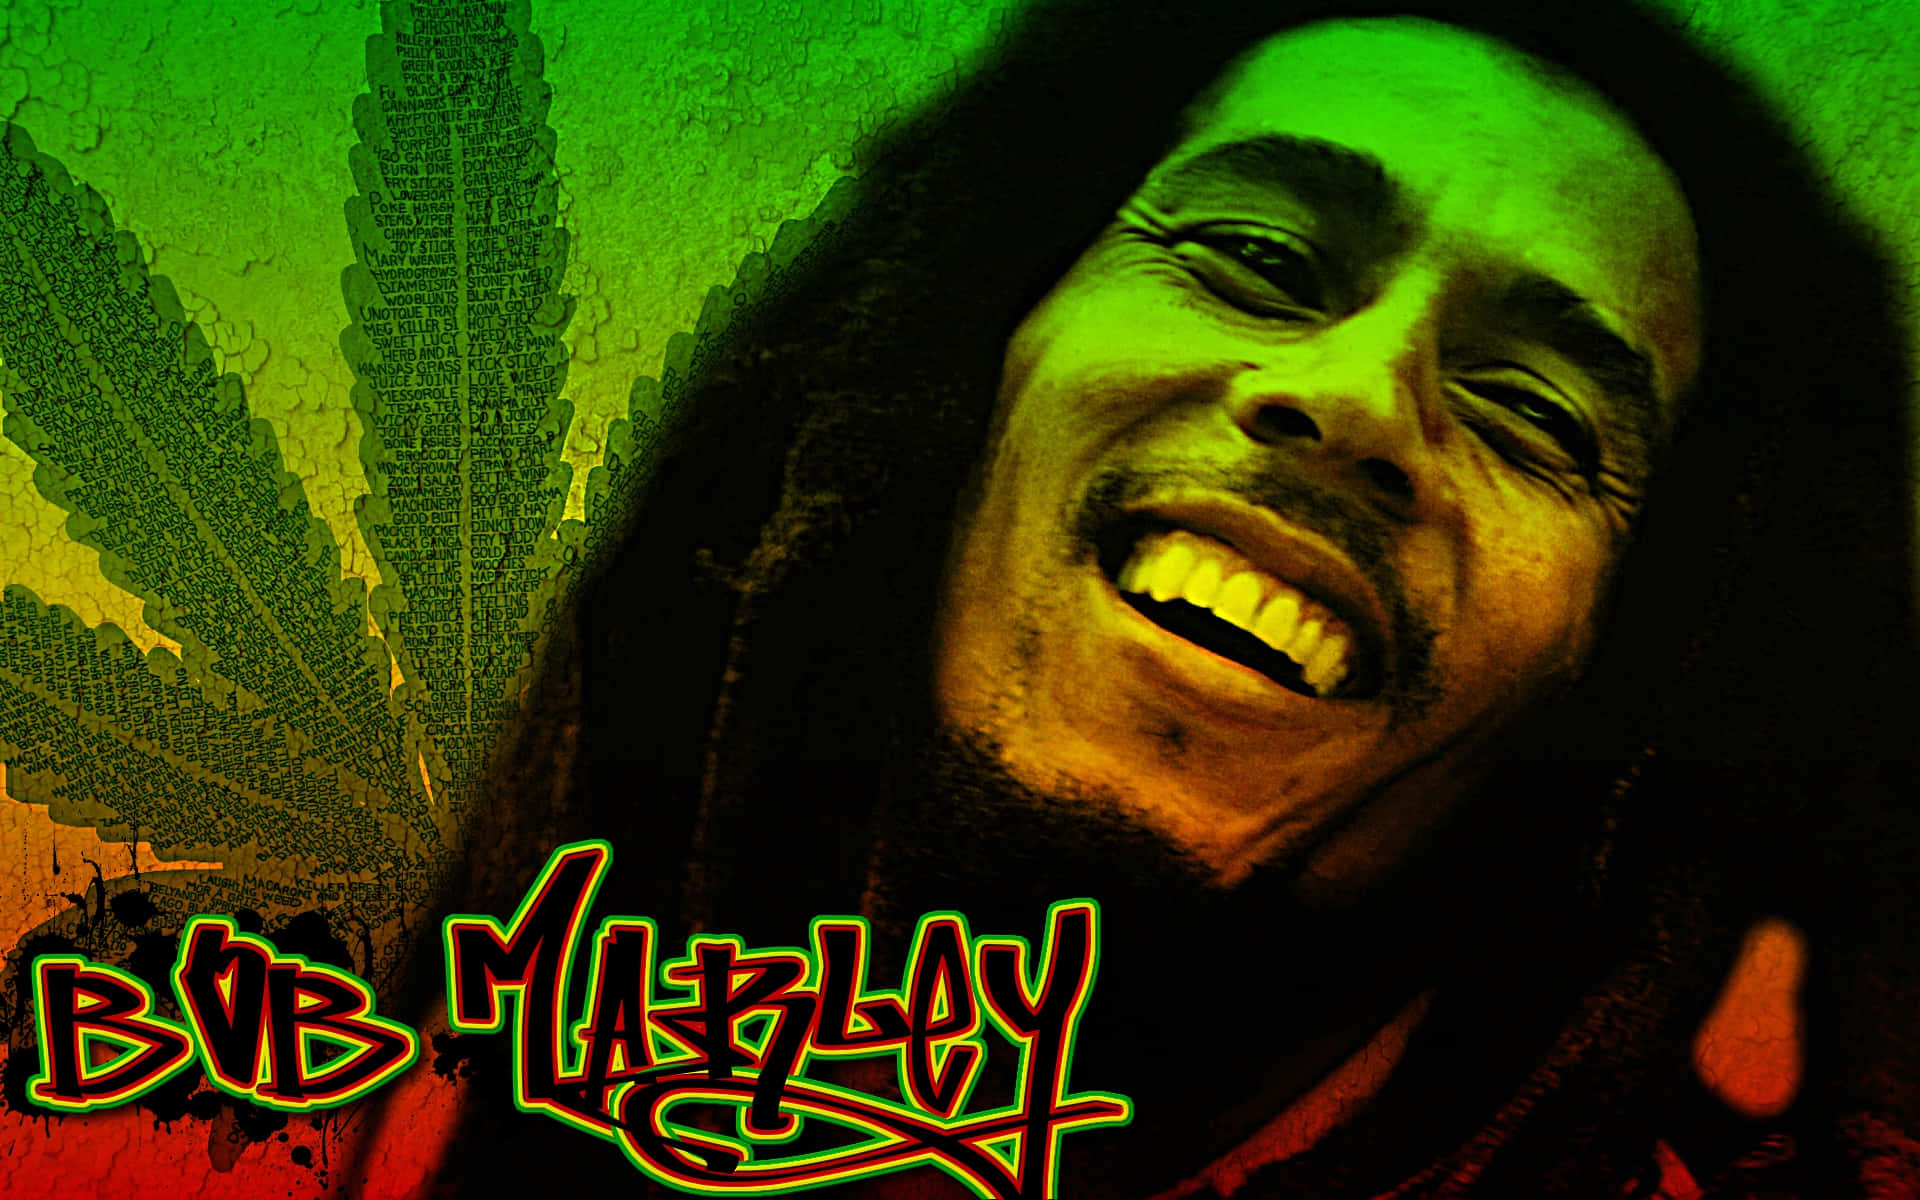 Bobmarley Tapeter - Bob Marley Tapeter